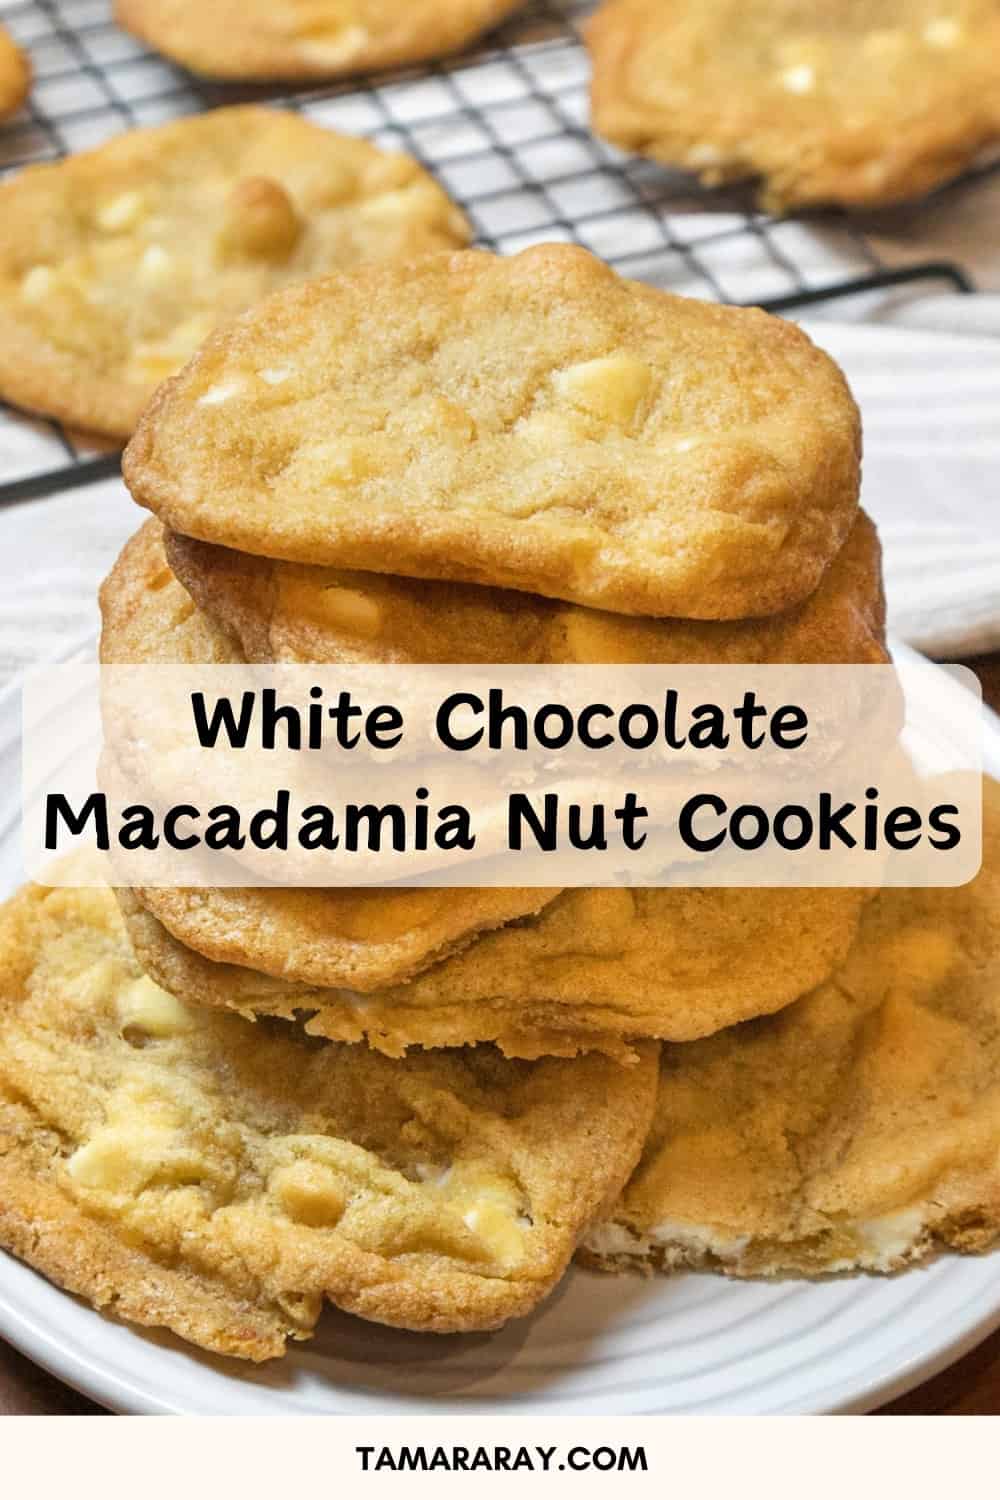 White chocolate macadamia nut cookies on a plate.